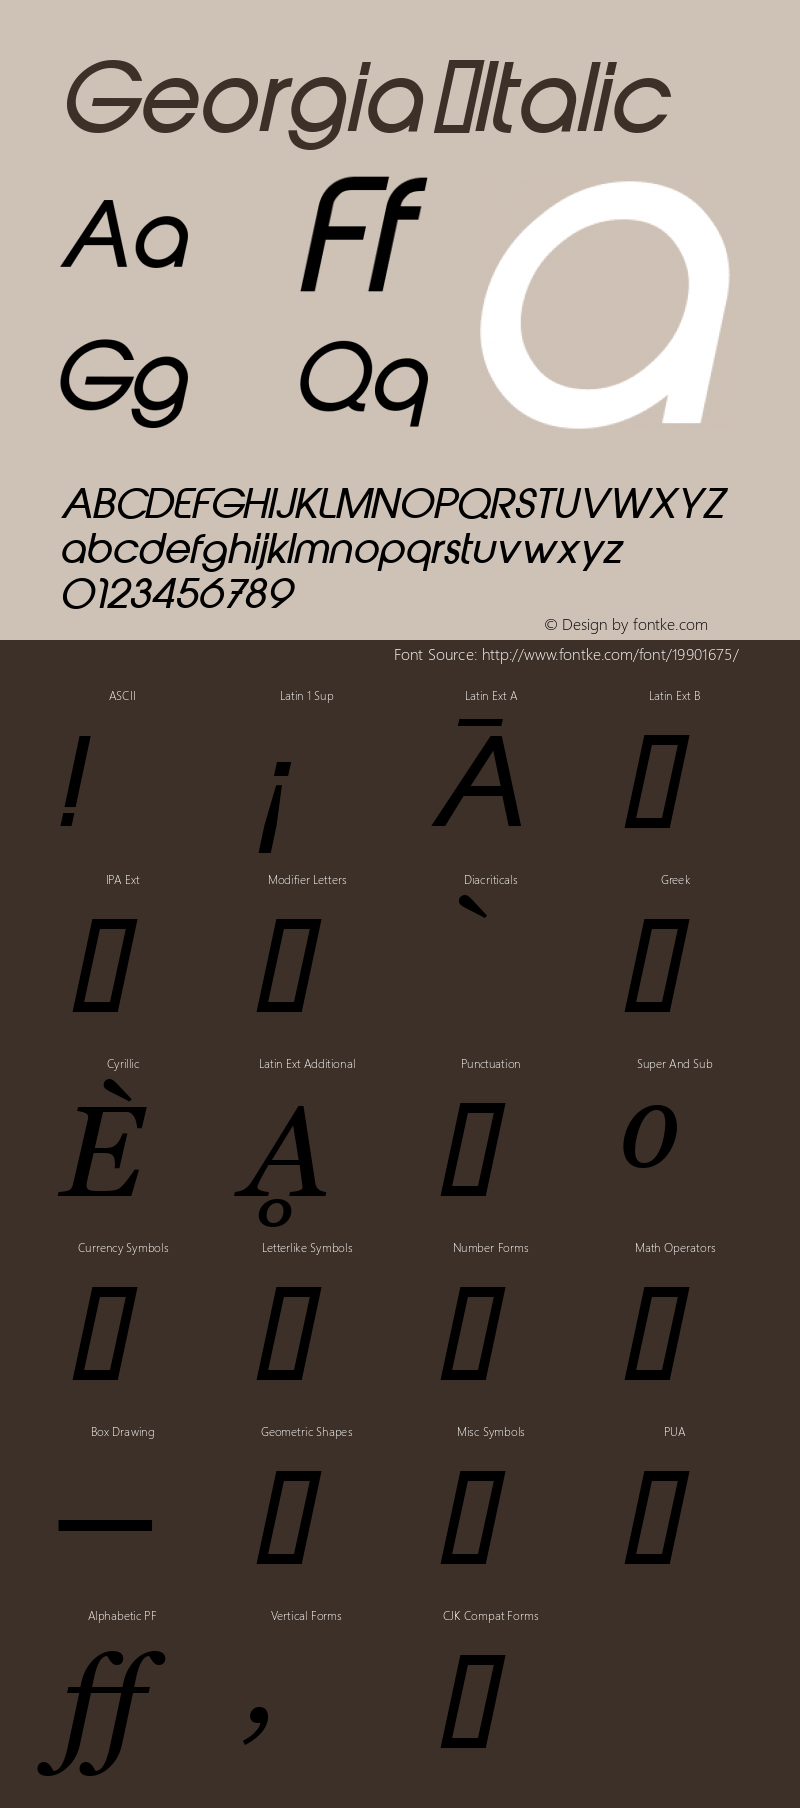 Georgia Italic Version 5.00x-4 Font Sample